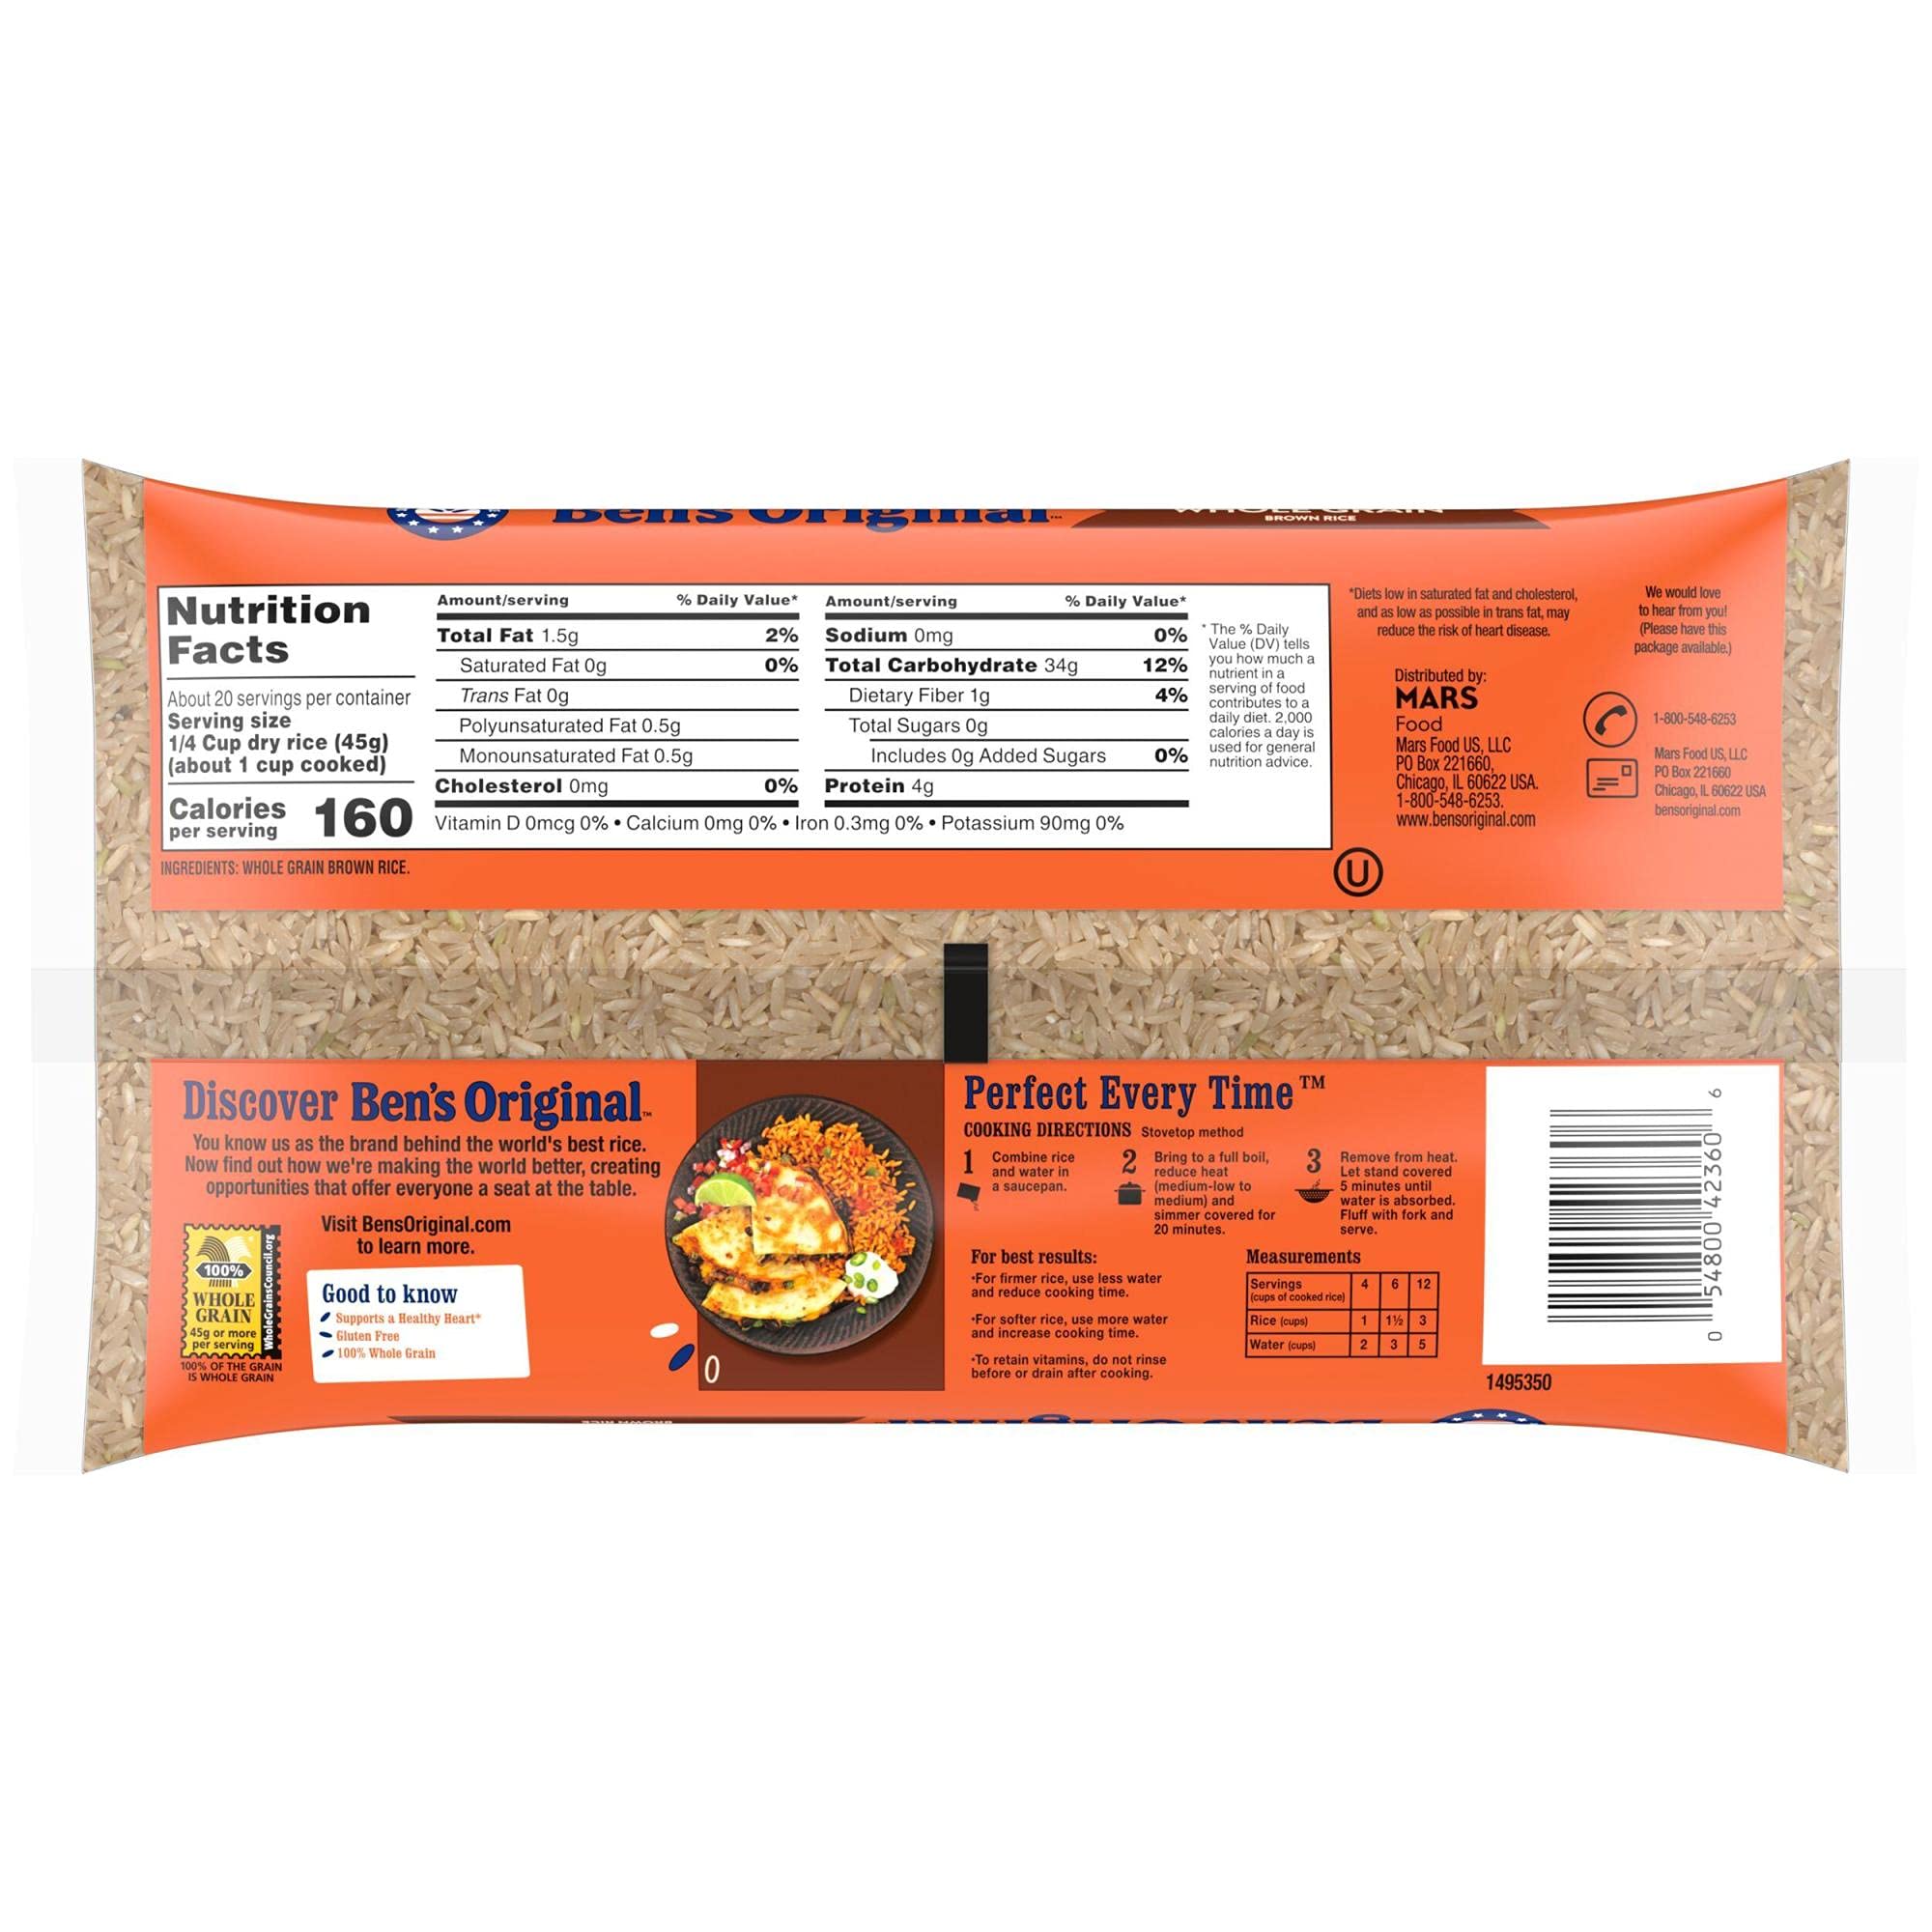 Success Boil-in-Bag Brown Rice, Whole Grain Brown Rice, 32 oz Box -  Walmart.com